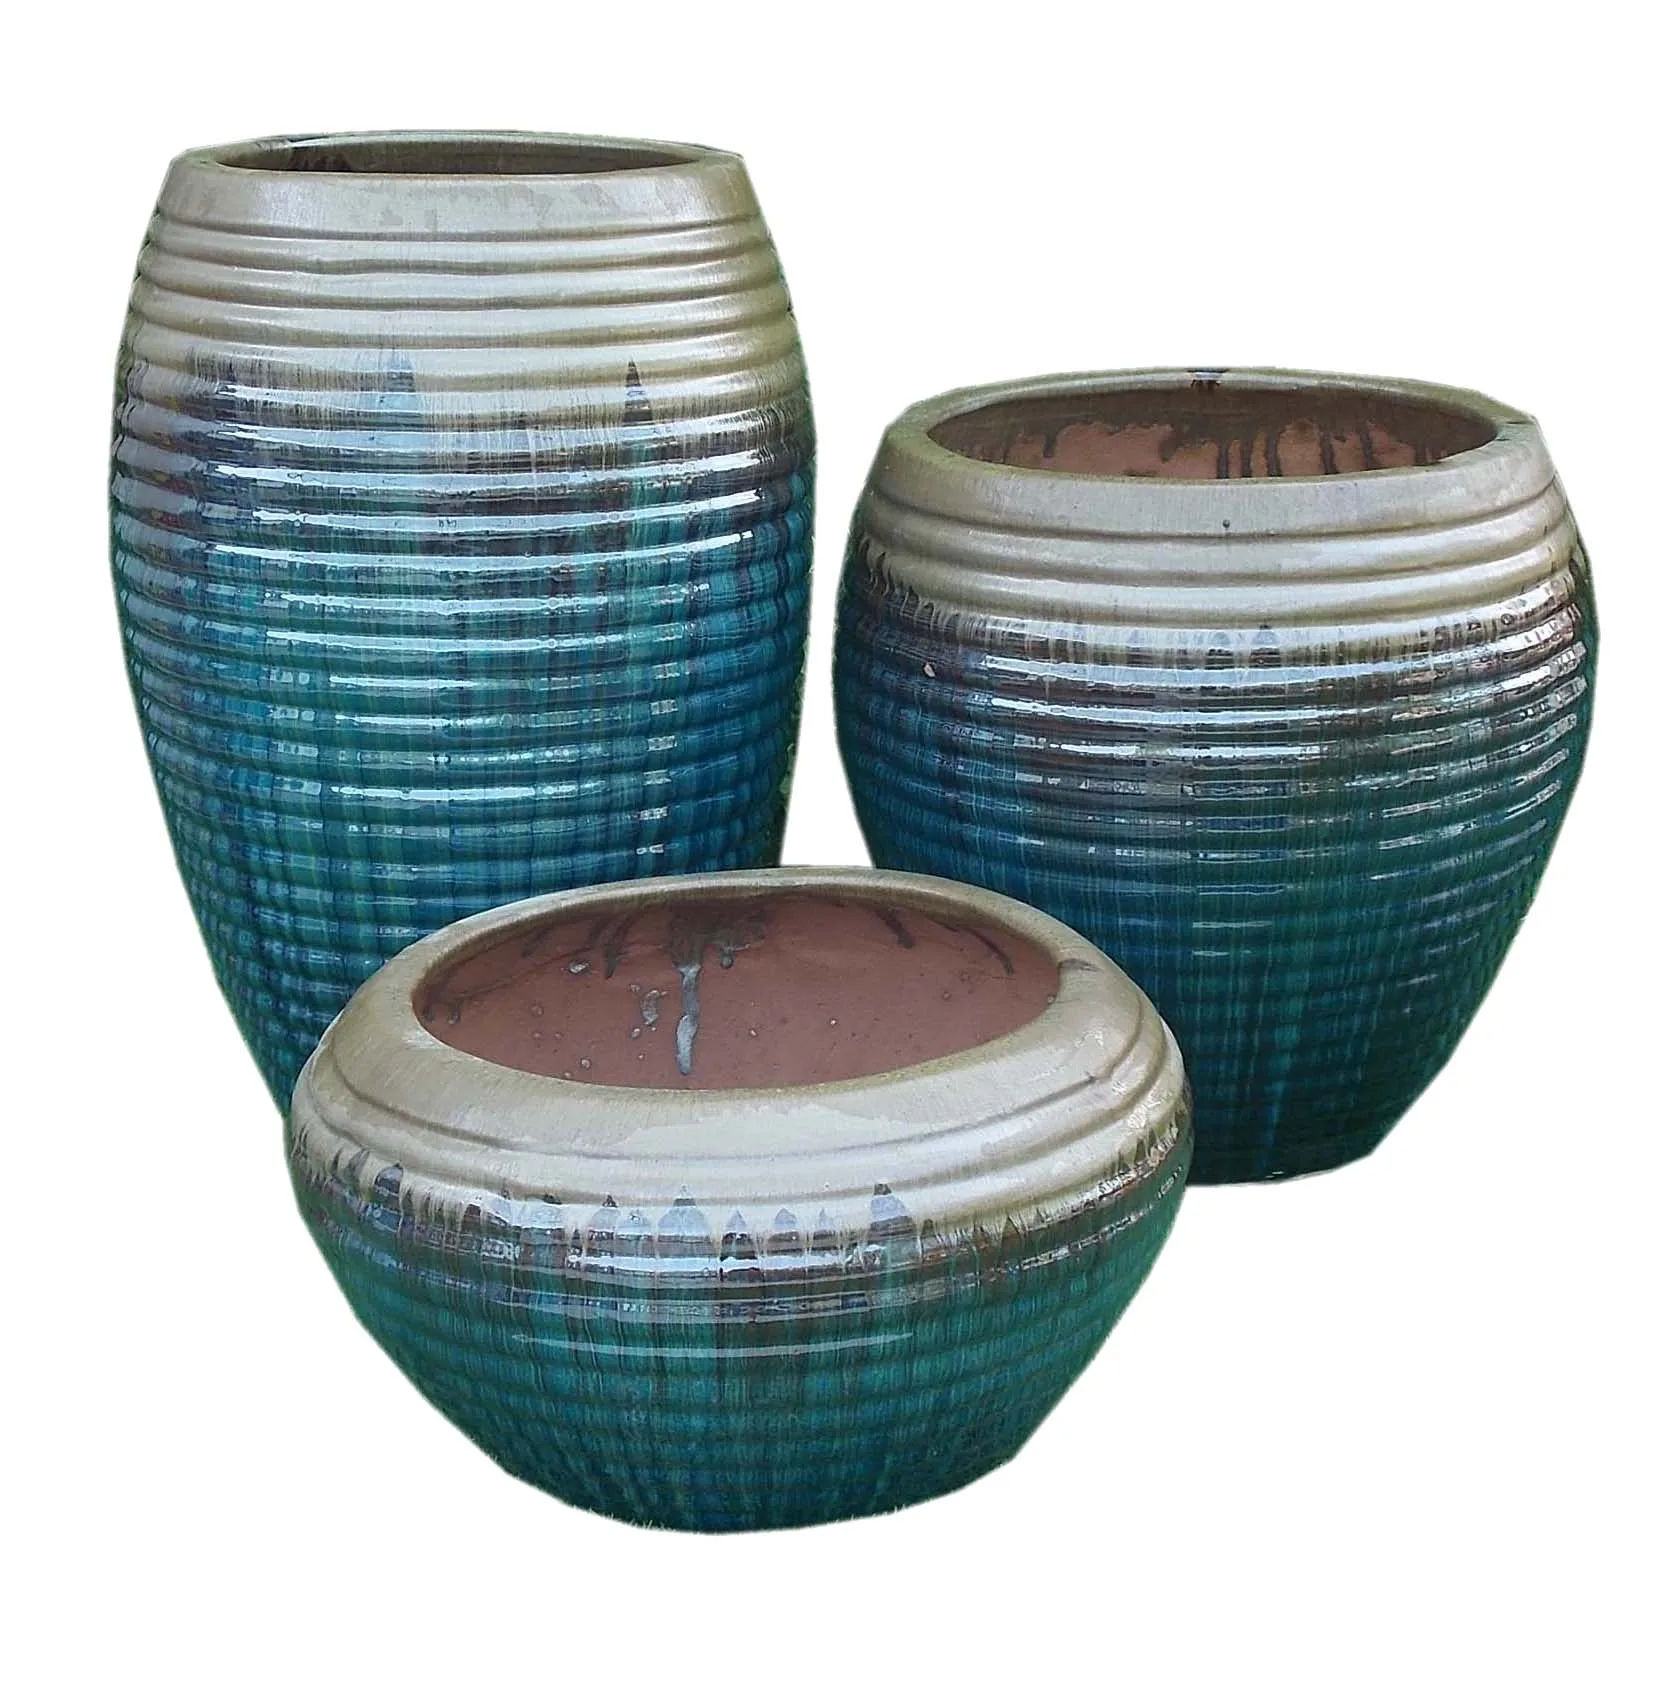 Handmade Simple Style European Design Ceramic Flower Planter Glazed Pottery Decorative Live Garden Flower Pot for Outdoor Use